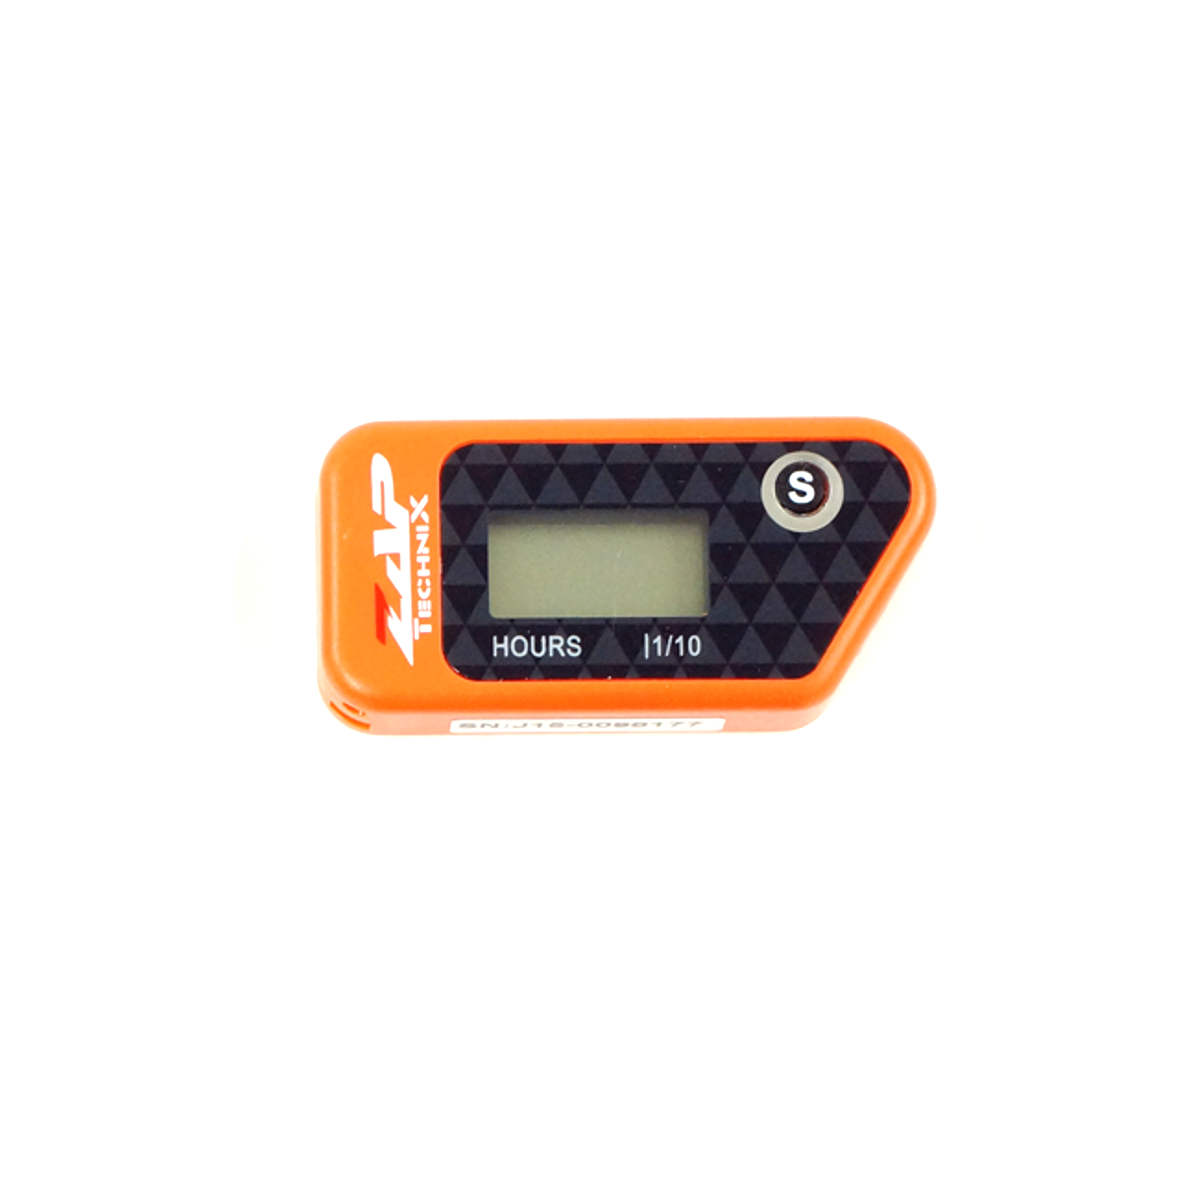 ZAP Contaore Master Wireless, resetable, Orange